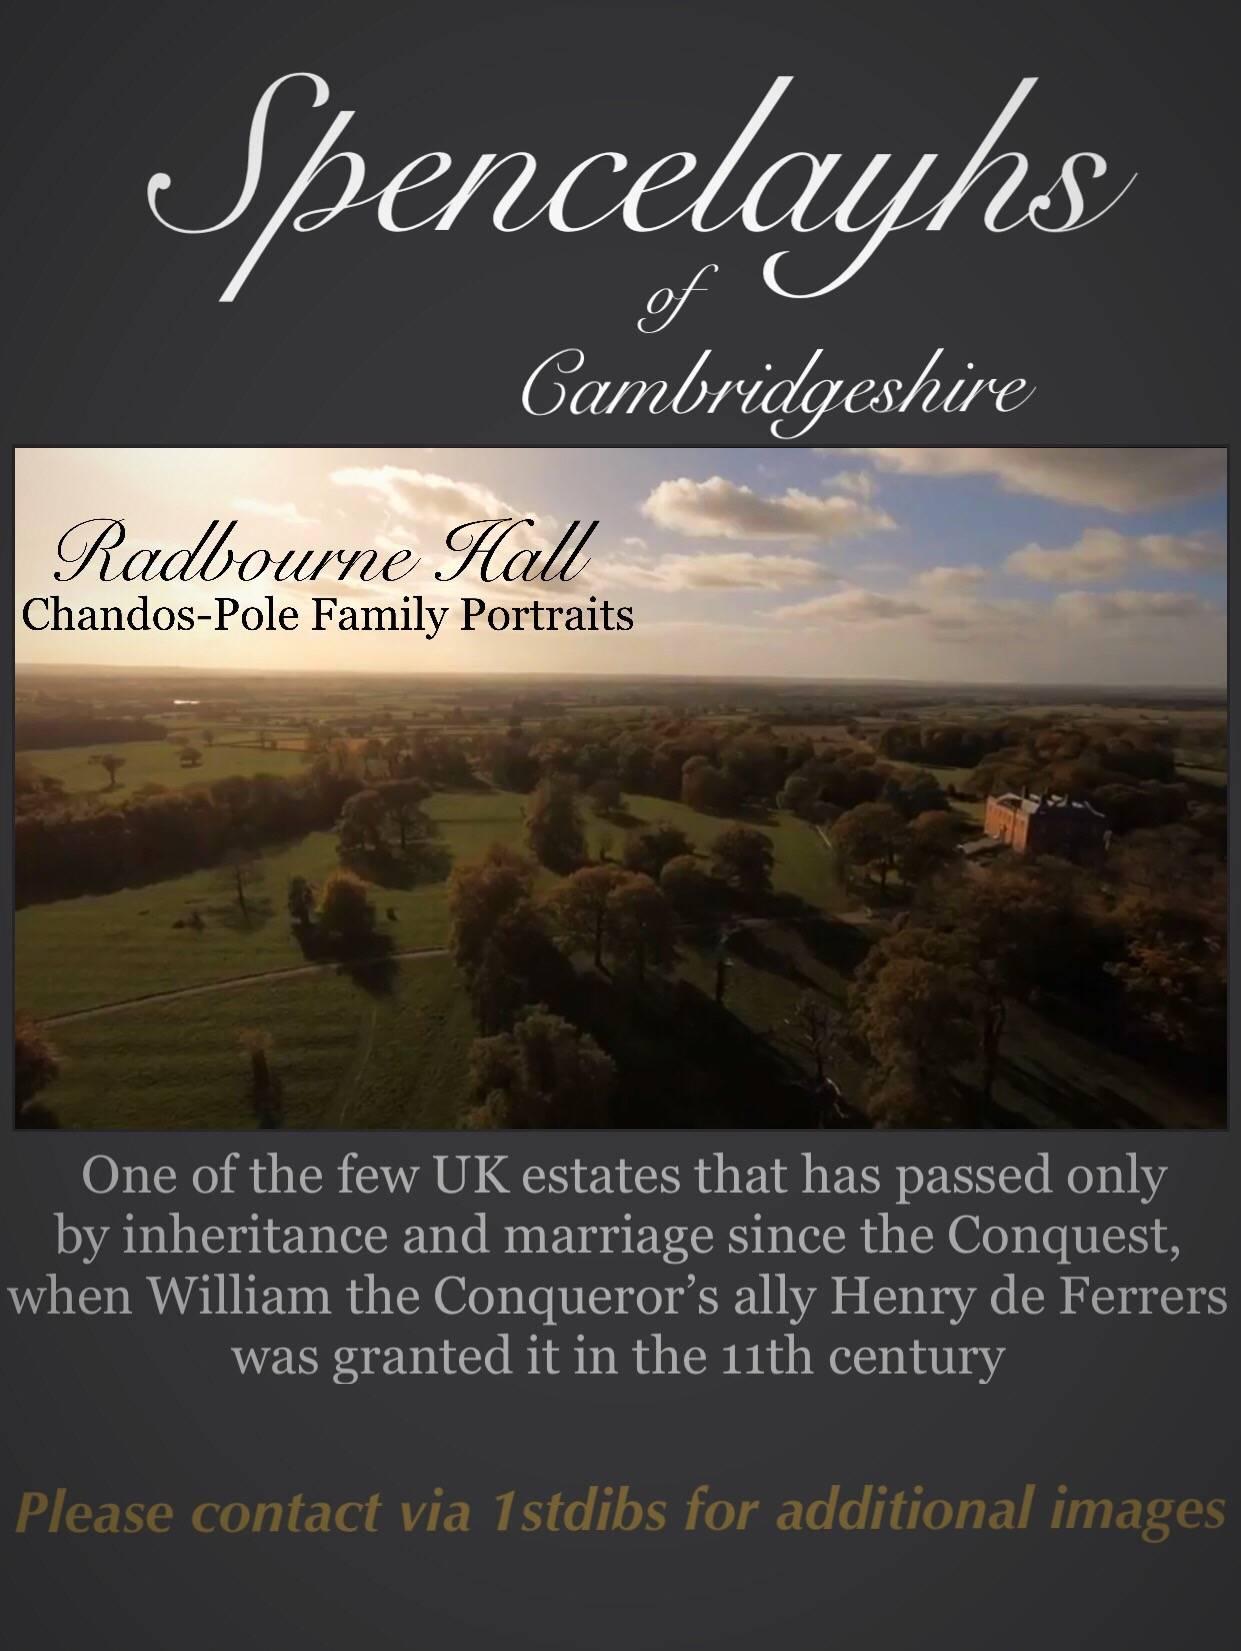 Regency Huge Full Length Portrait of the Chandos-Pole Family of Radbourne Hall England For Sale